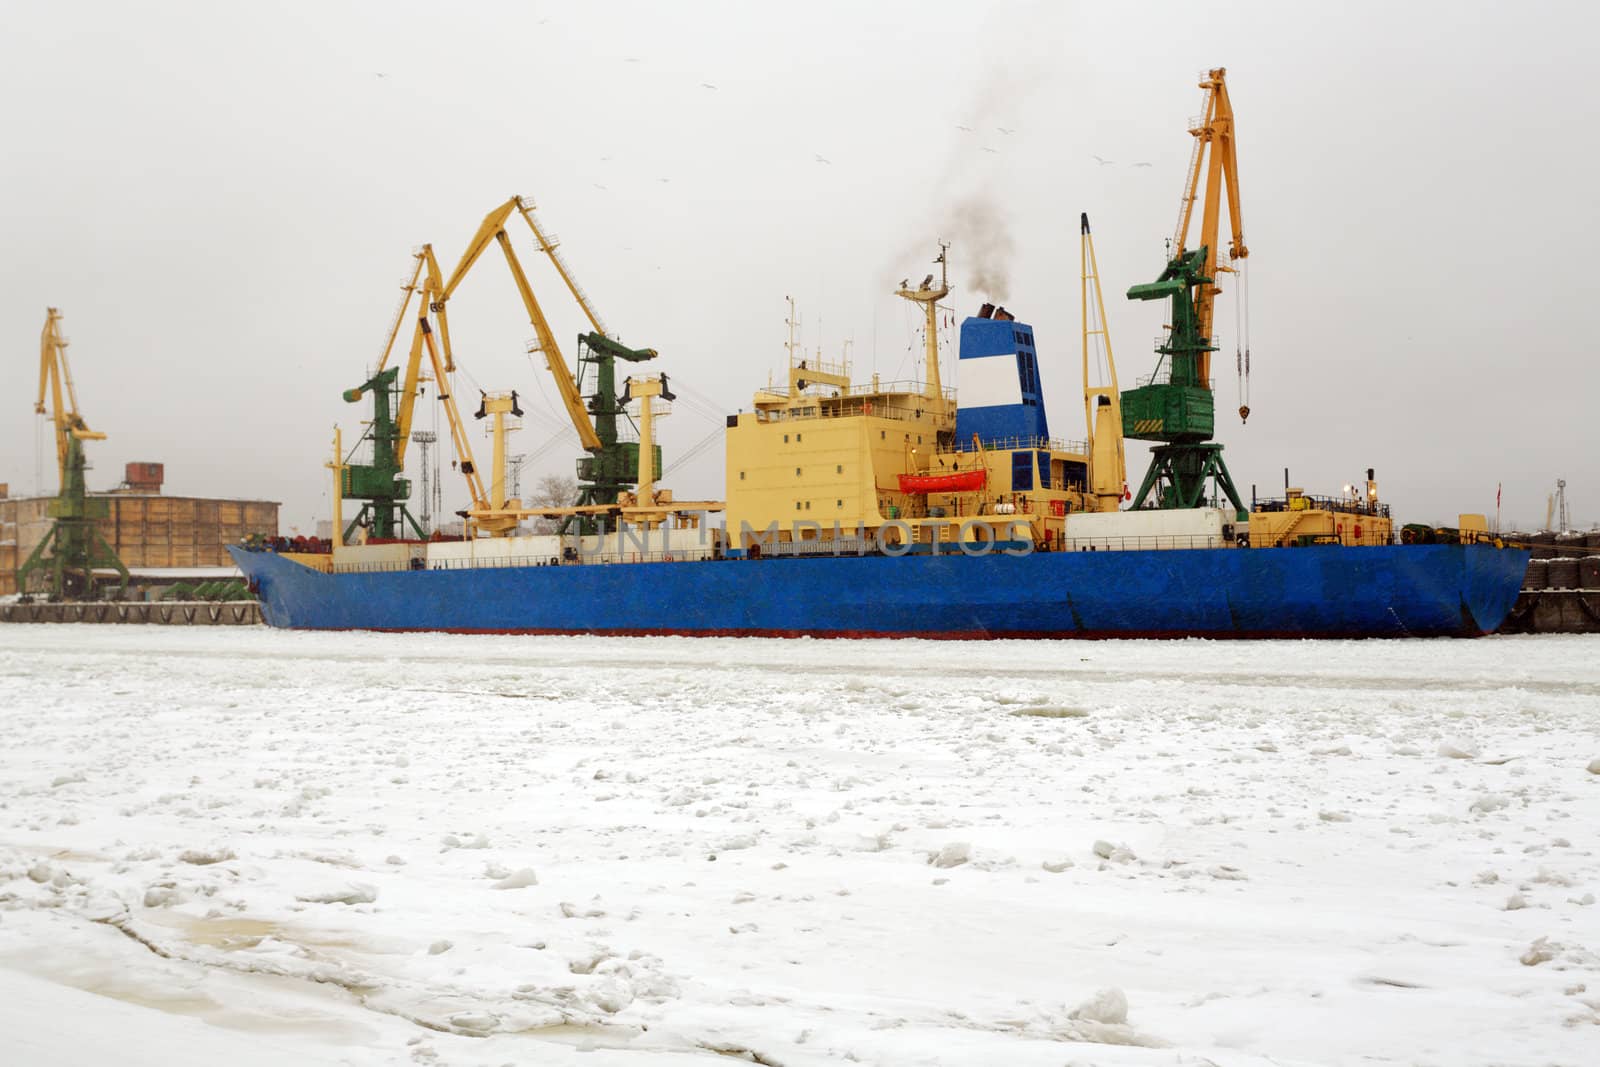 Cranes unloading a ship in a harbor